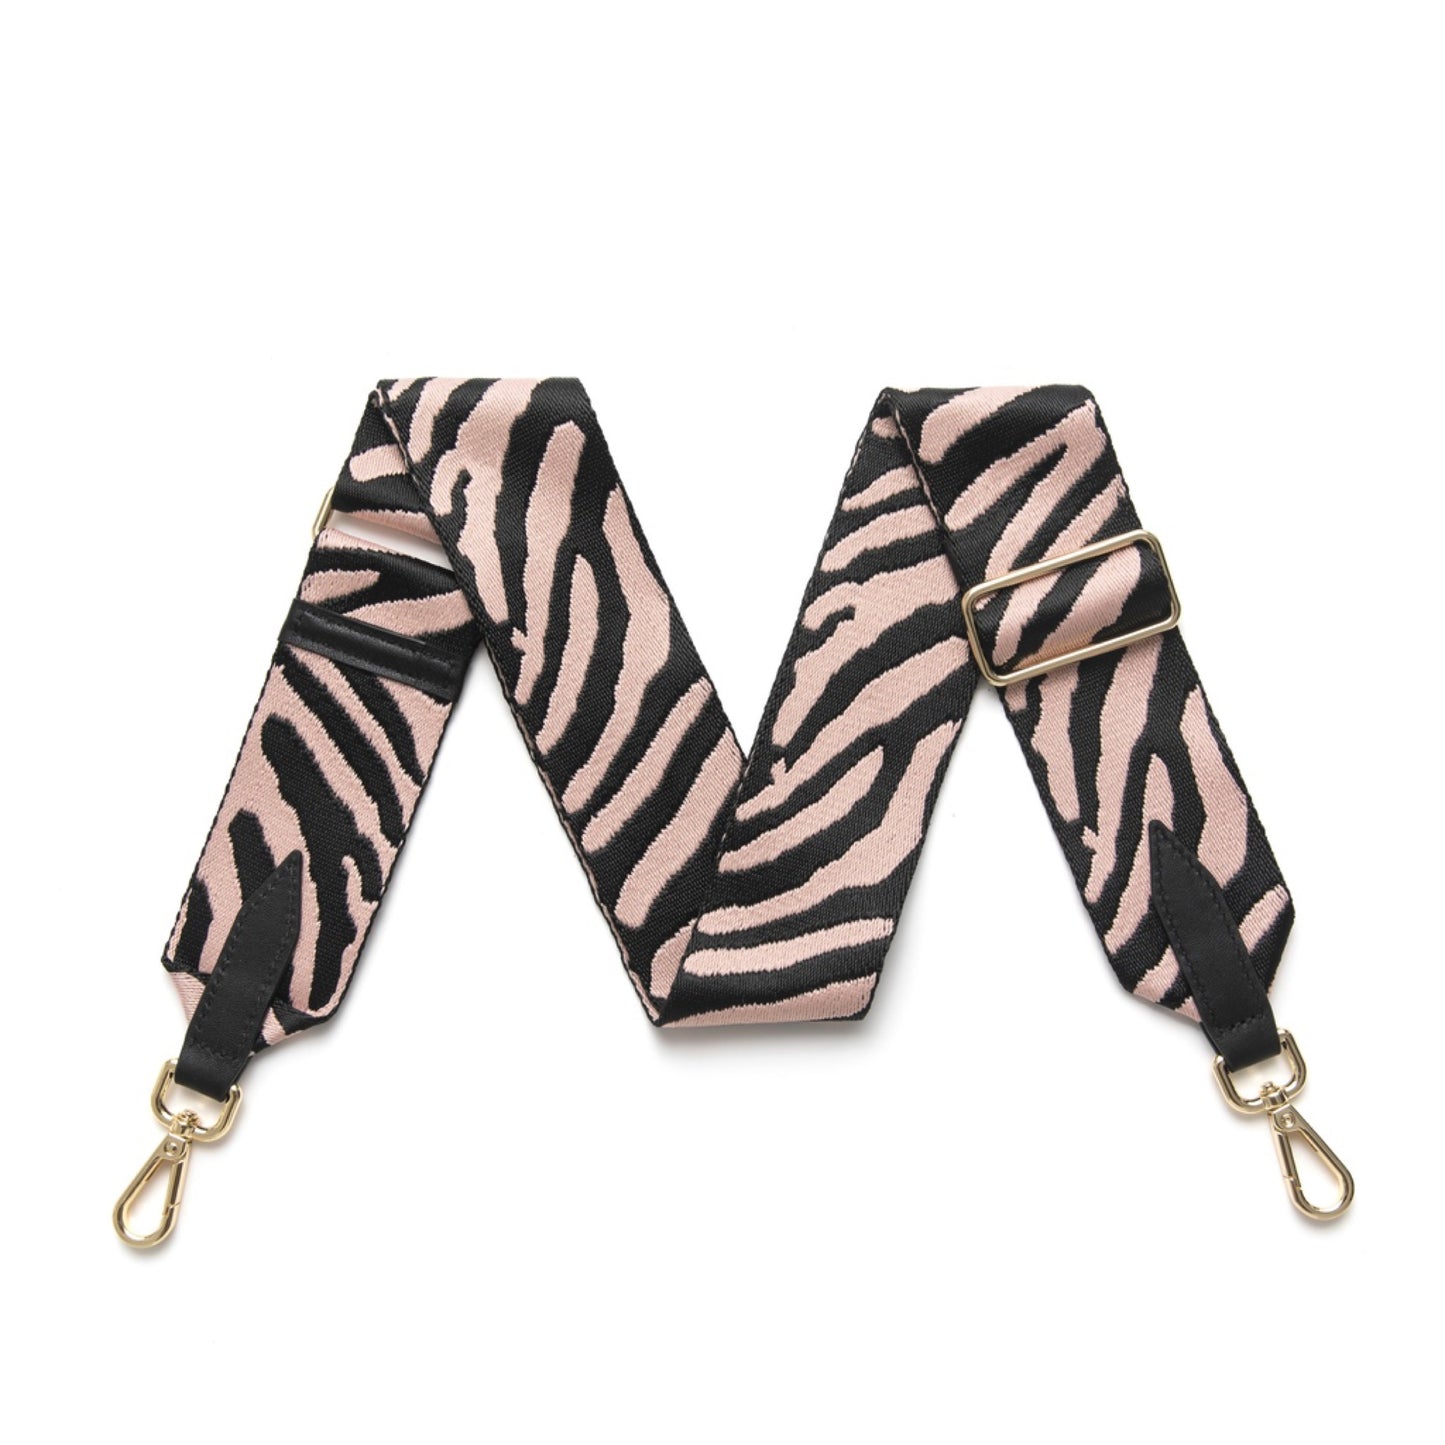 Pink zebra print bag strap